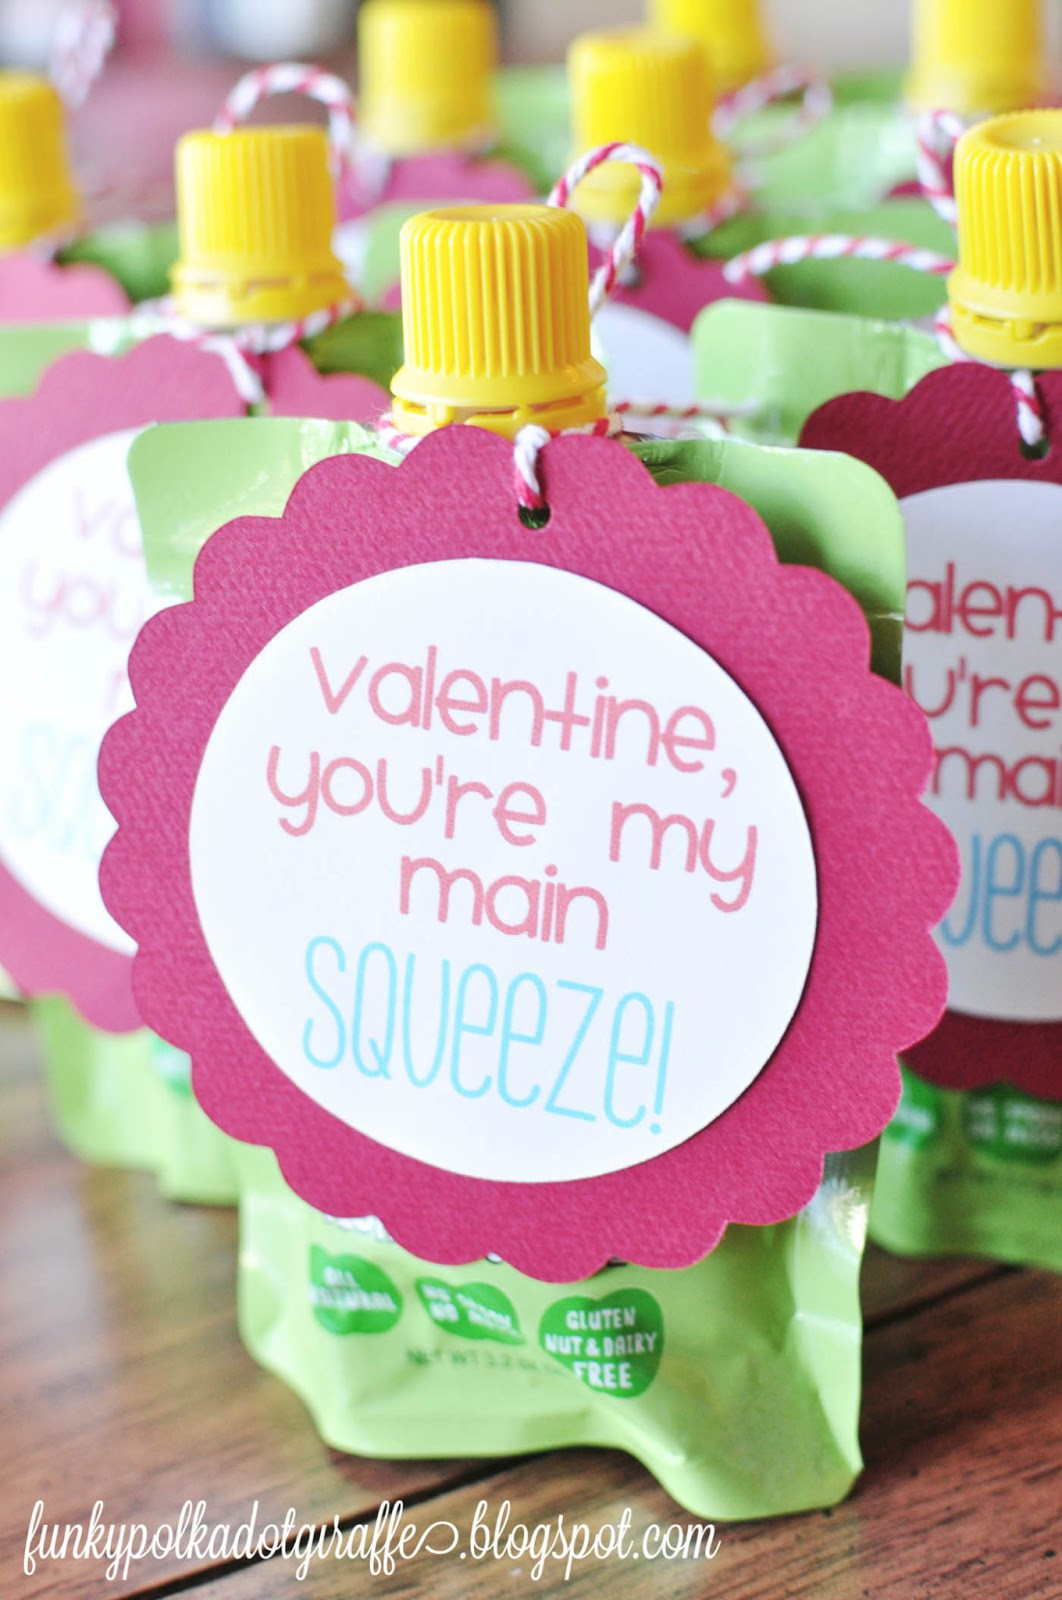 Toddler Valentines Day Gift Ideas
 Funky Polkadot Giraffe Preschool Valentines You re My